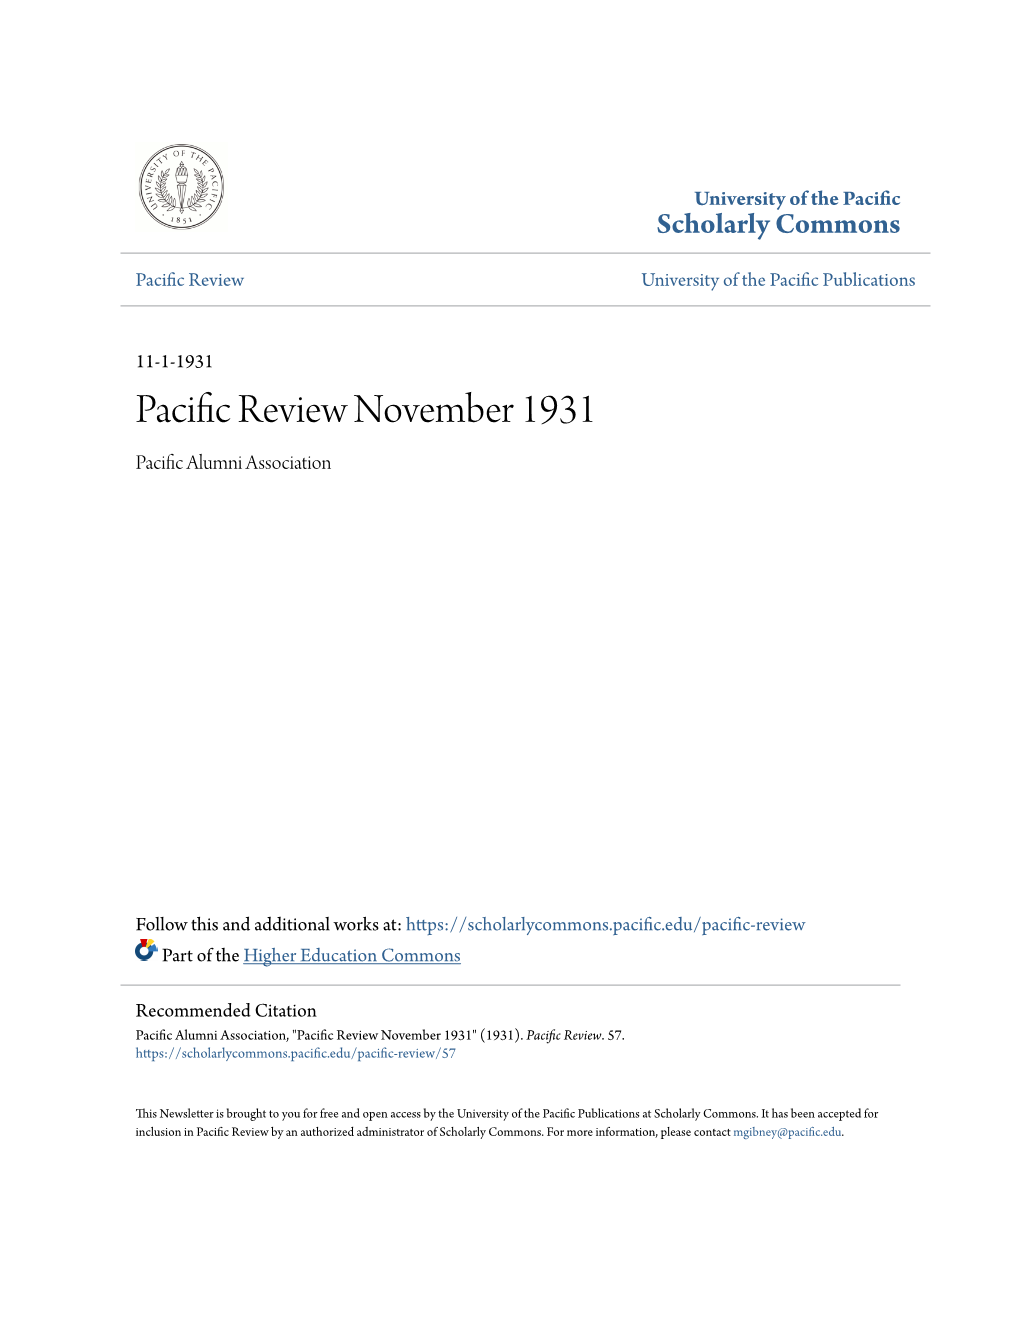 Pacific Review November 1931 Pacific Alumni Association